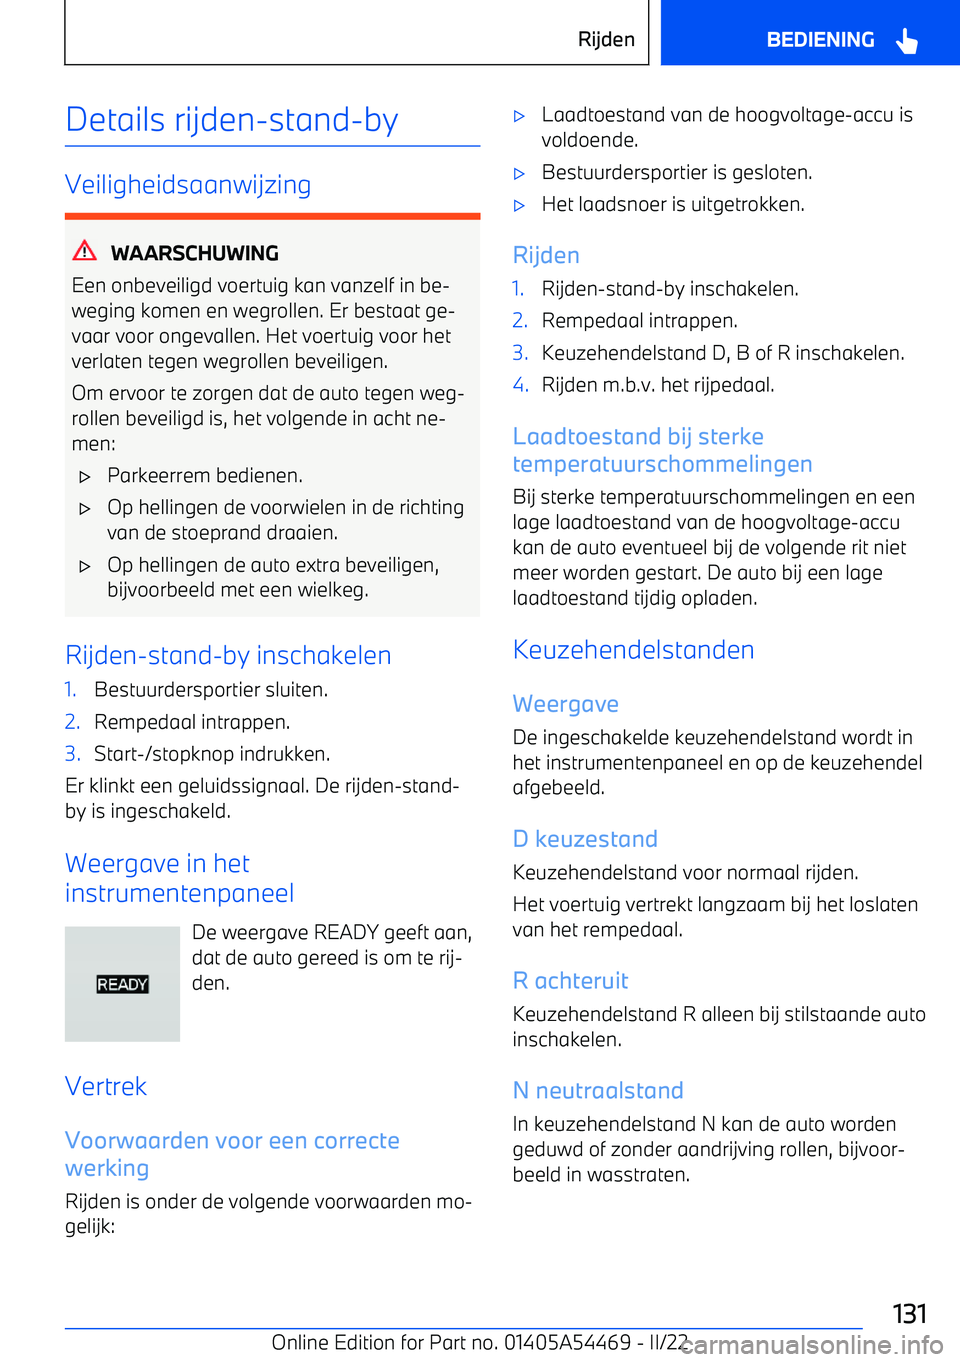 BMW IX 2022  Instructieboekjes (in Dutch) Details rijden